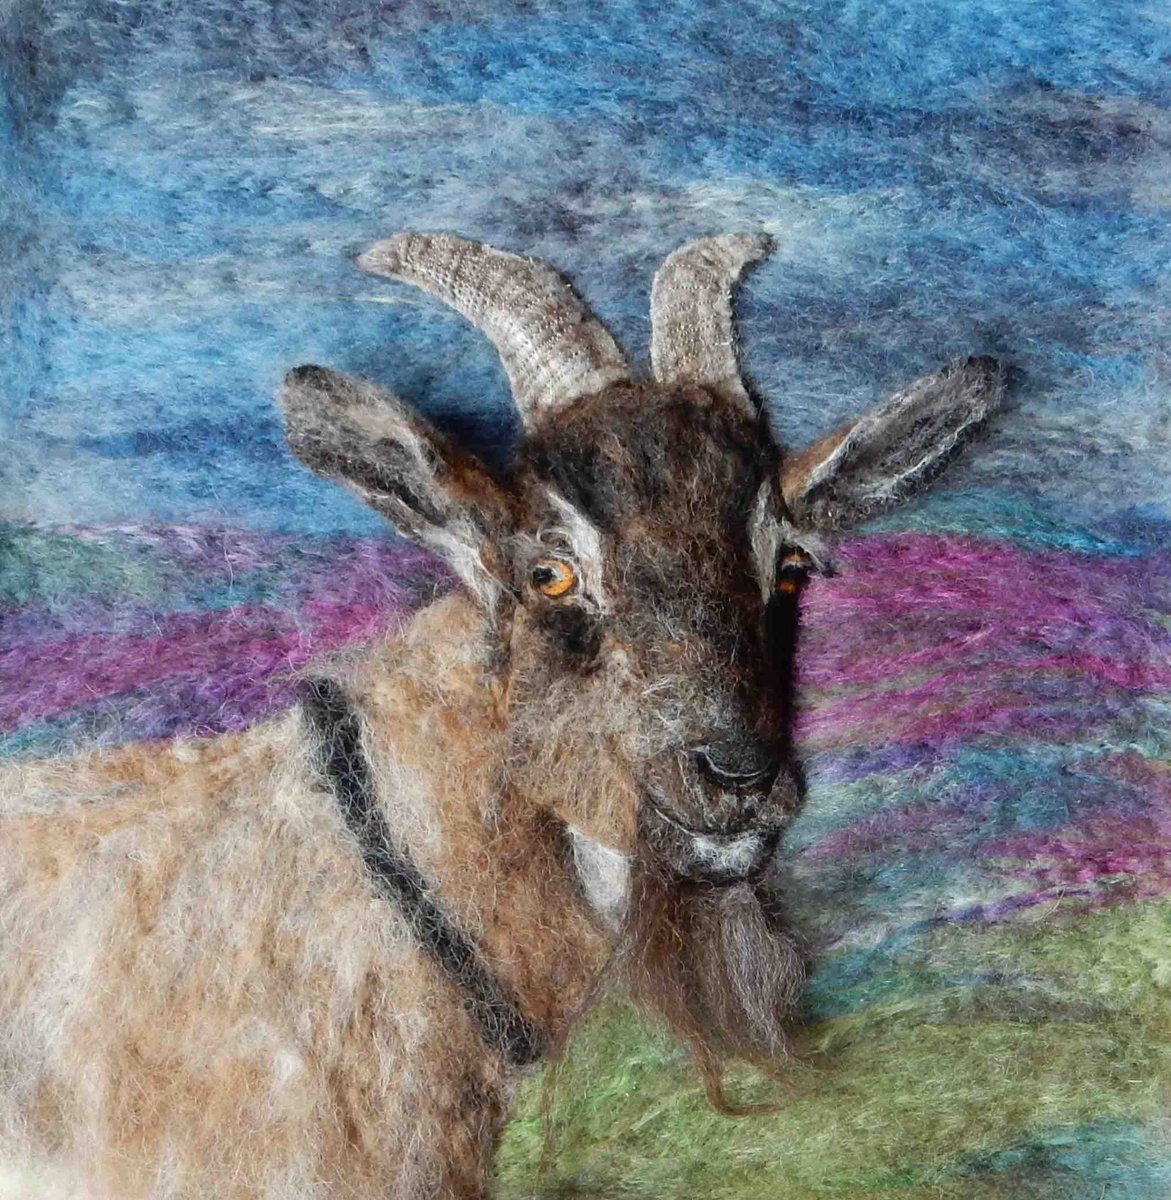 Day 5 of my A-Z of fibre art animal portraits. E is for #exmoorpony #eriskaypony #exmoorhorn and #englishgoat #britishfibreart #madeincumbia ullswaterfeltart.com/rare-breeds #britishnativebreeds